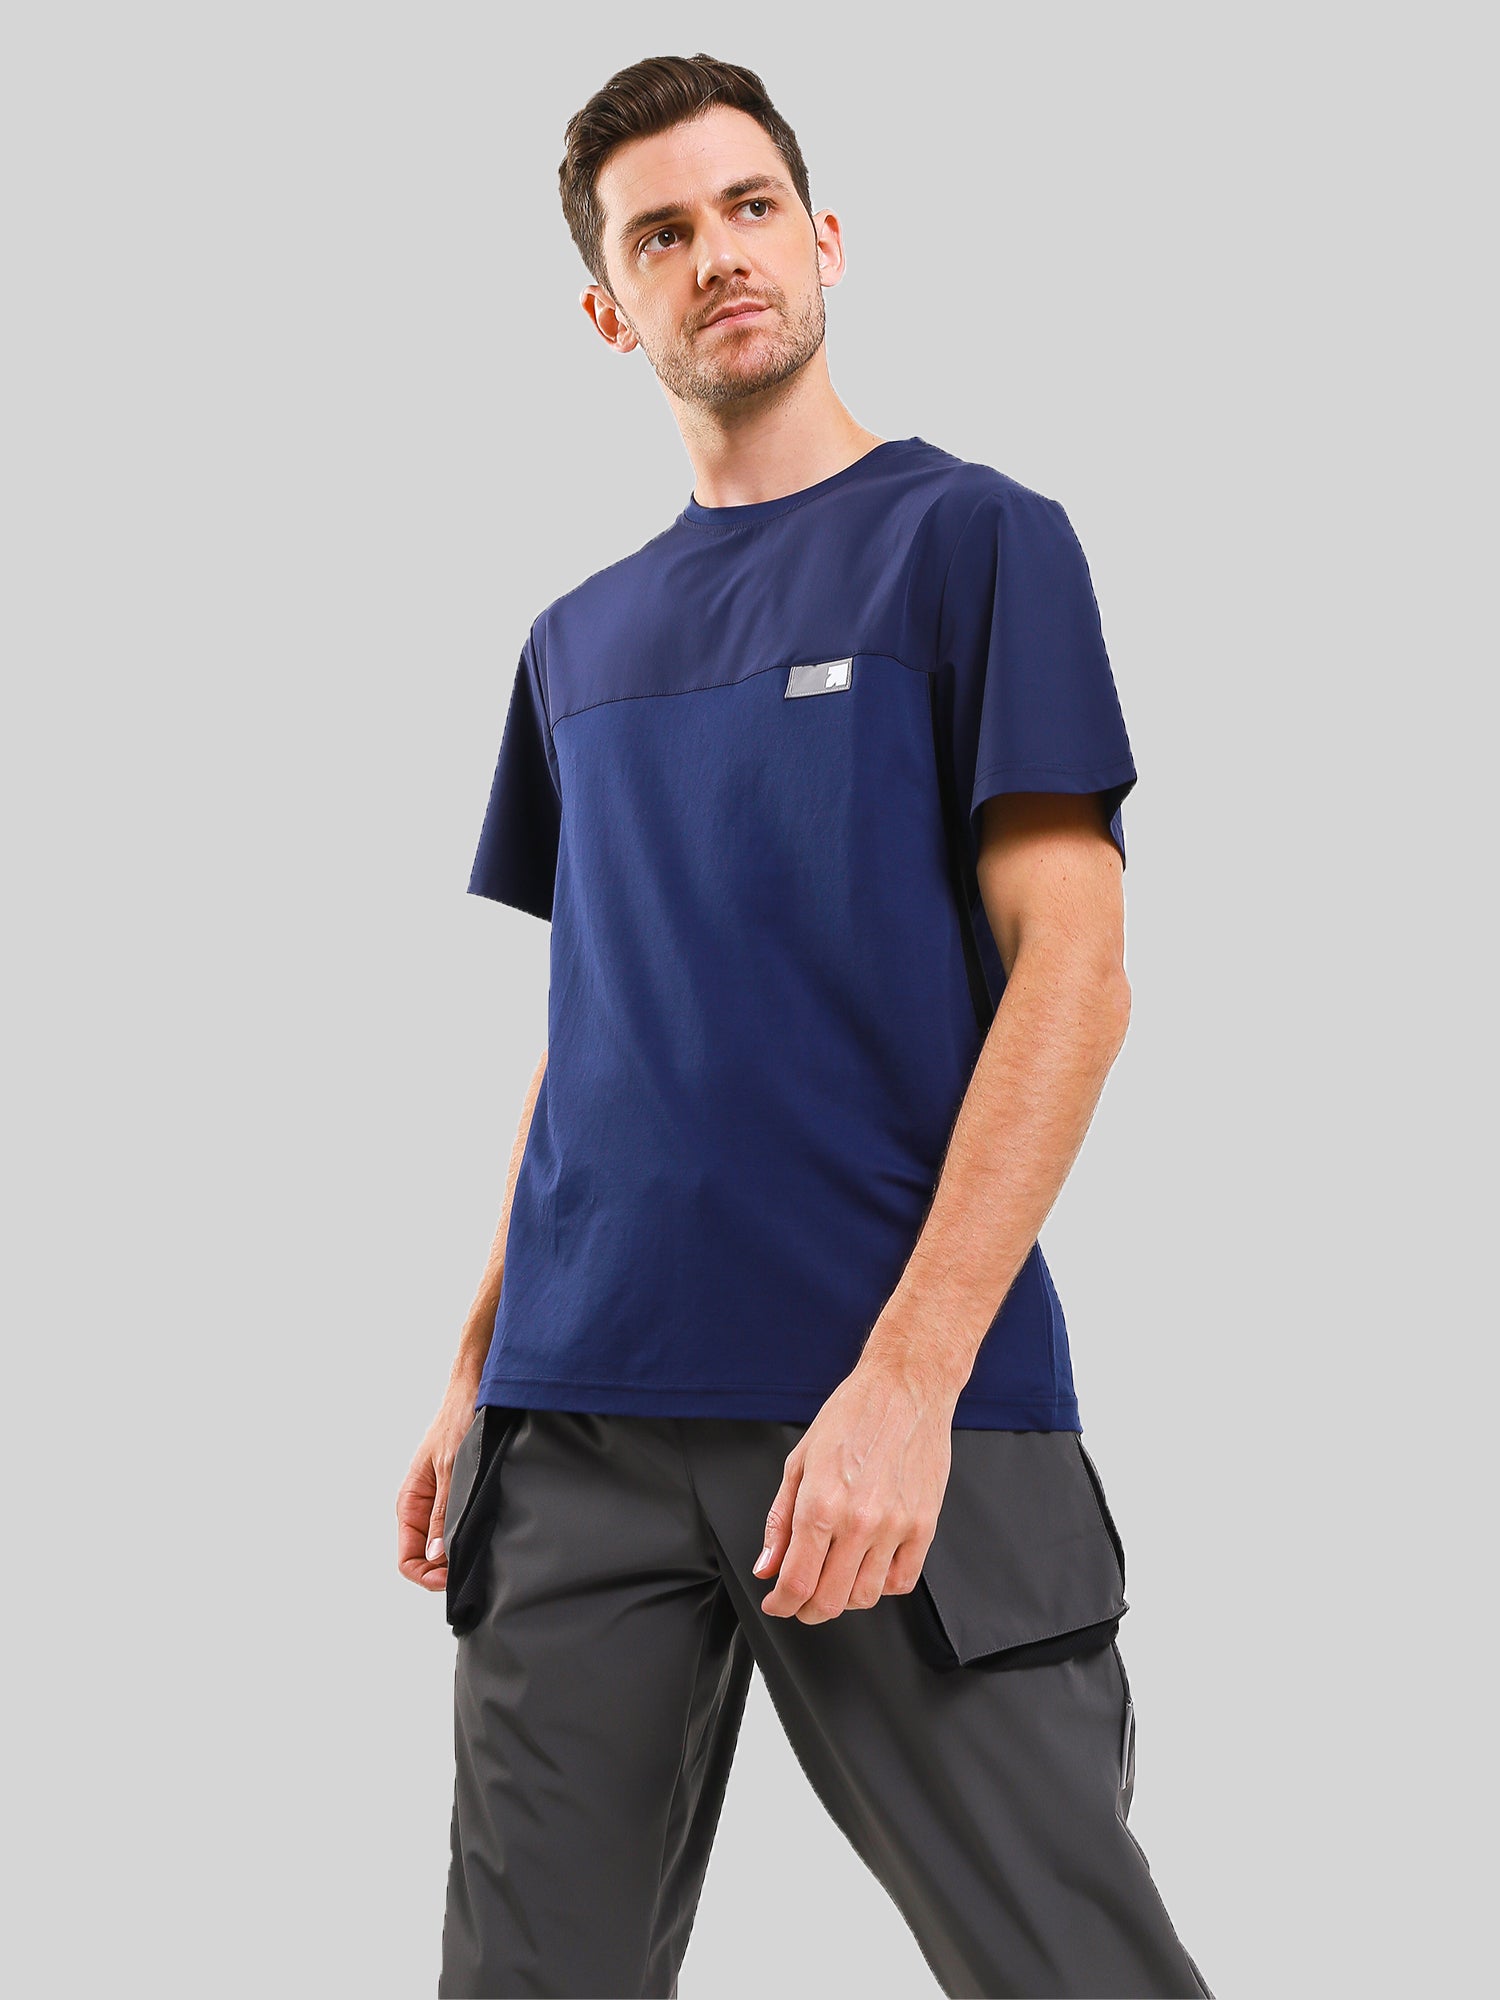 Unisex Ultimate Utilitarian Blue Male T-shirt